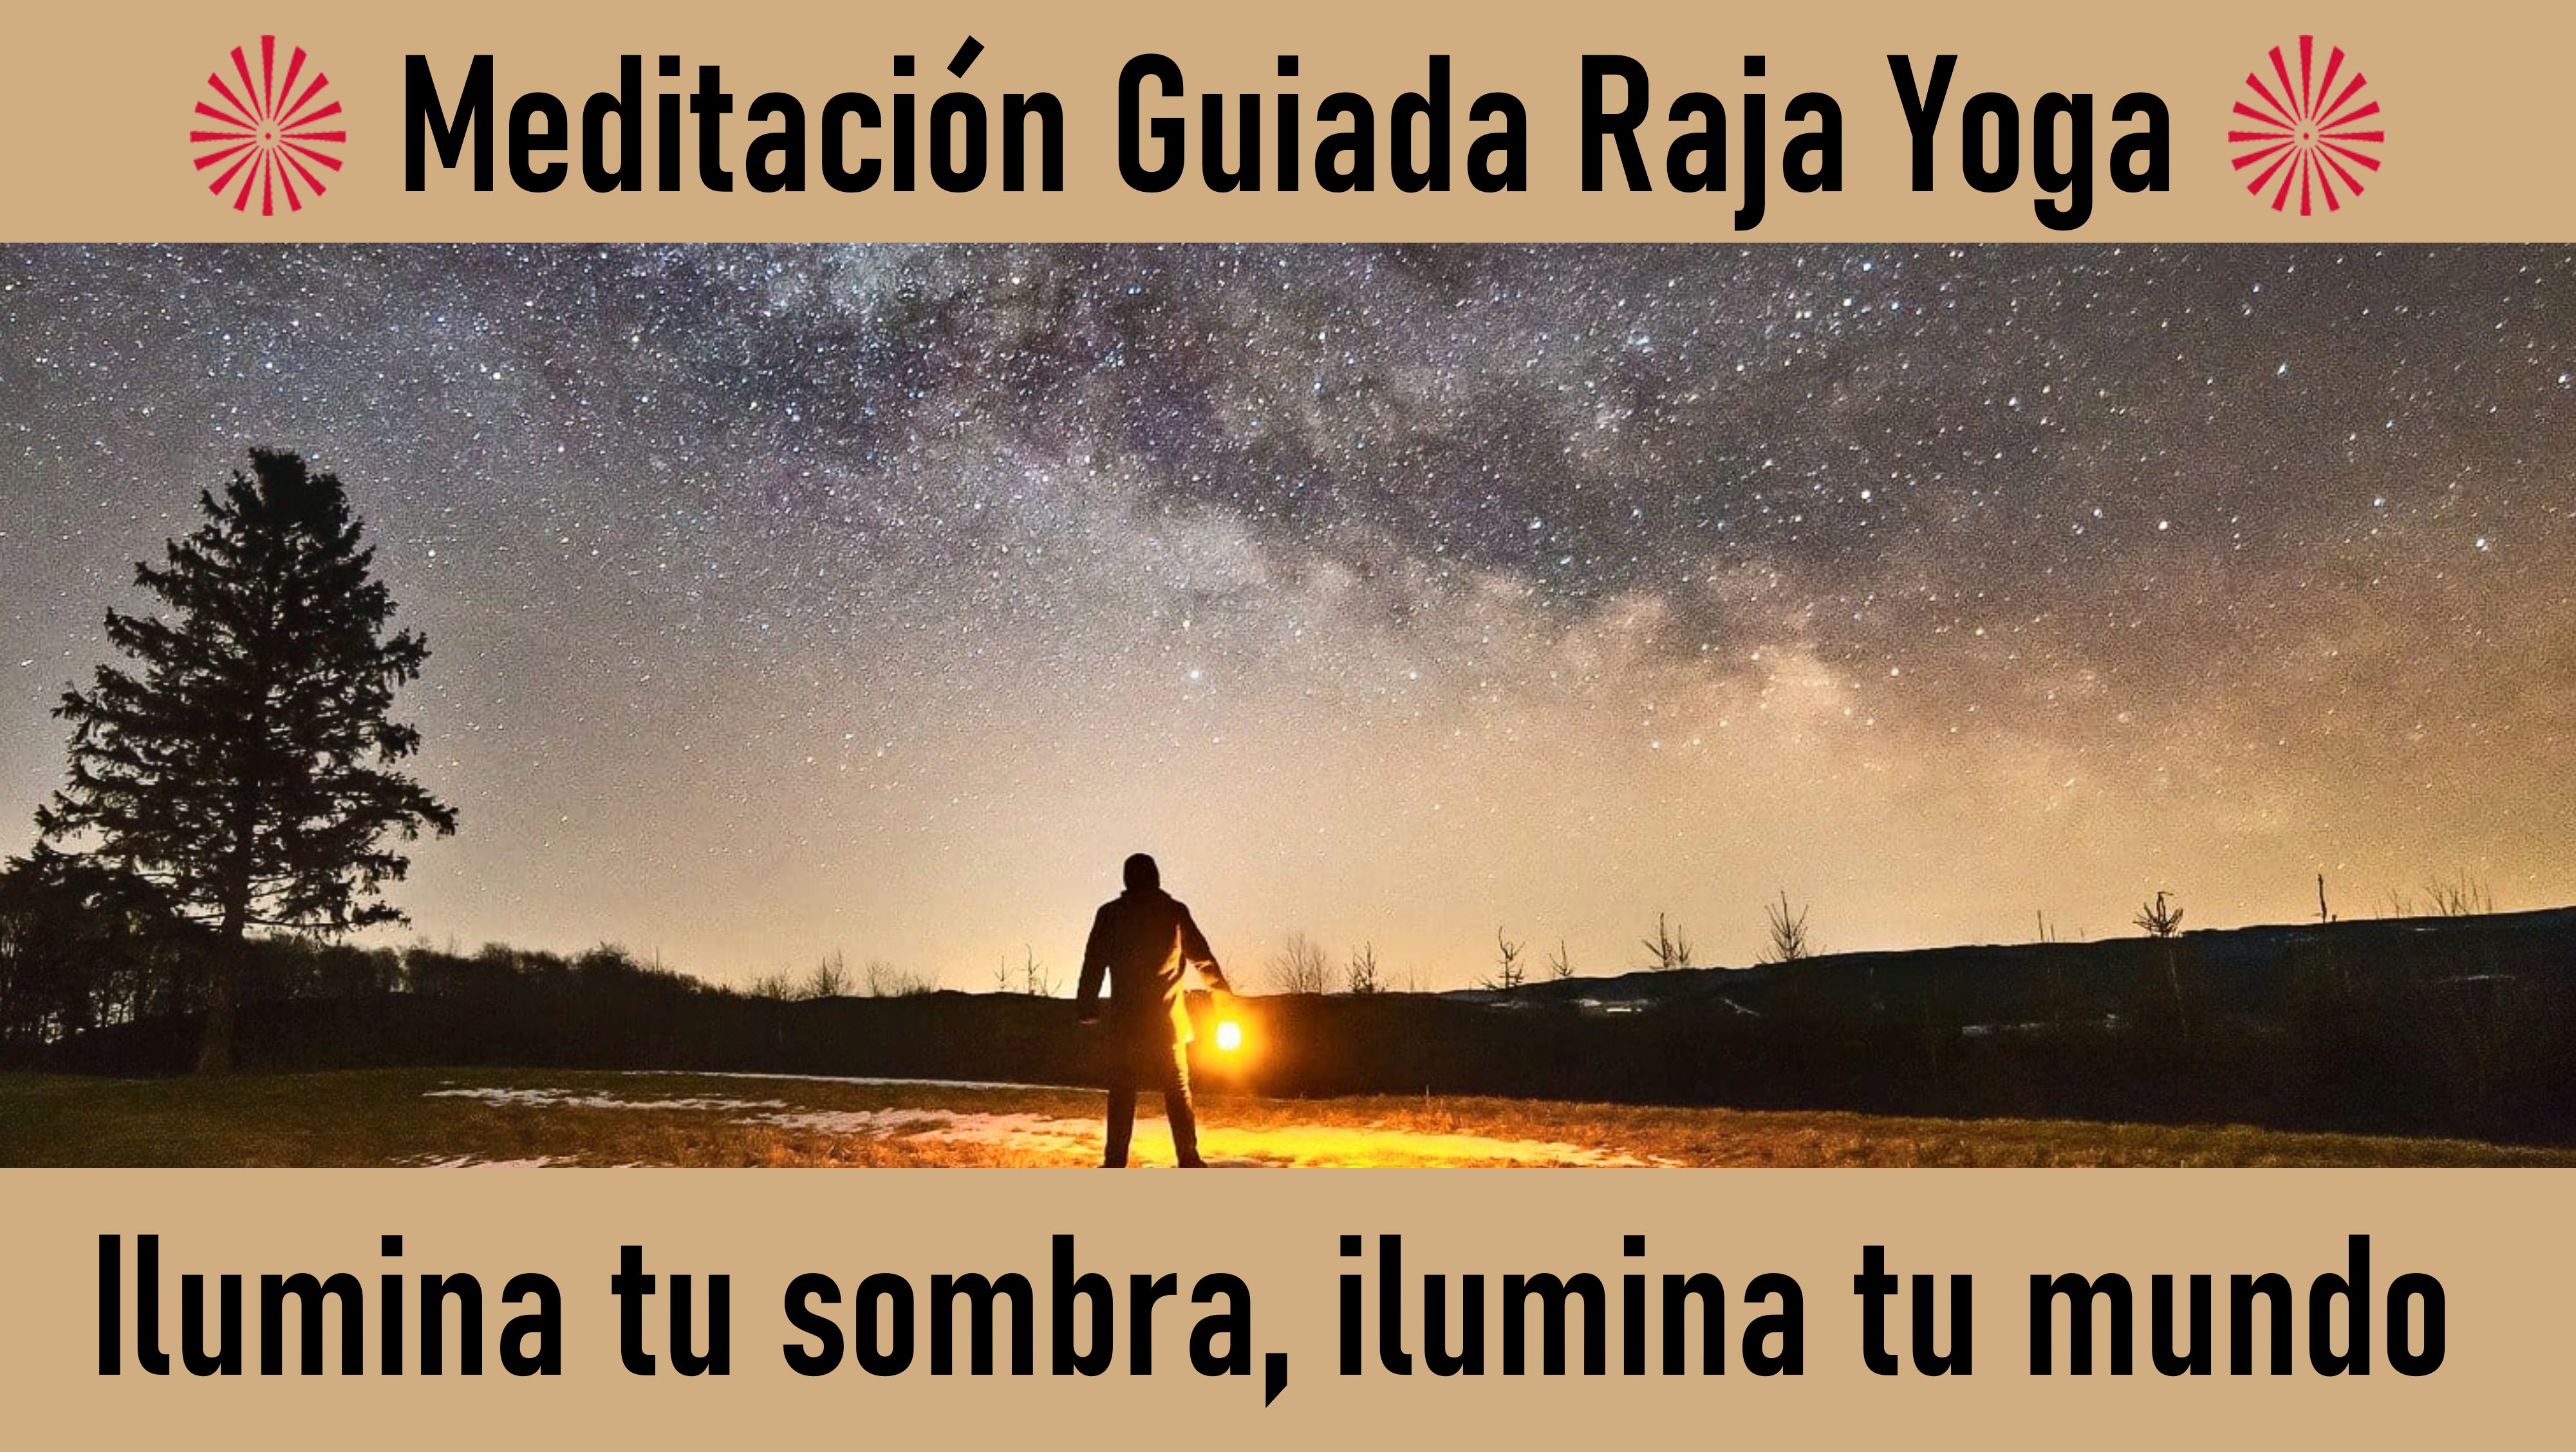 Meditación Raja Yoga: Ilumina tu sombra, ilumina tu mundo (25 Mayo 2020) On-line desde Barcelona